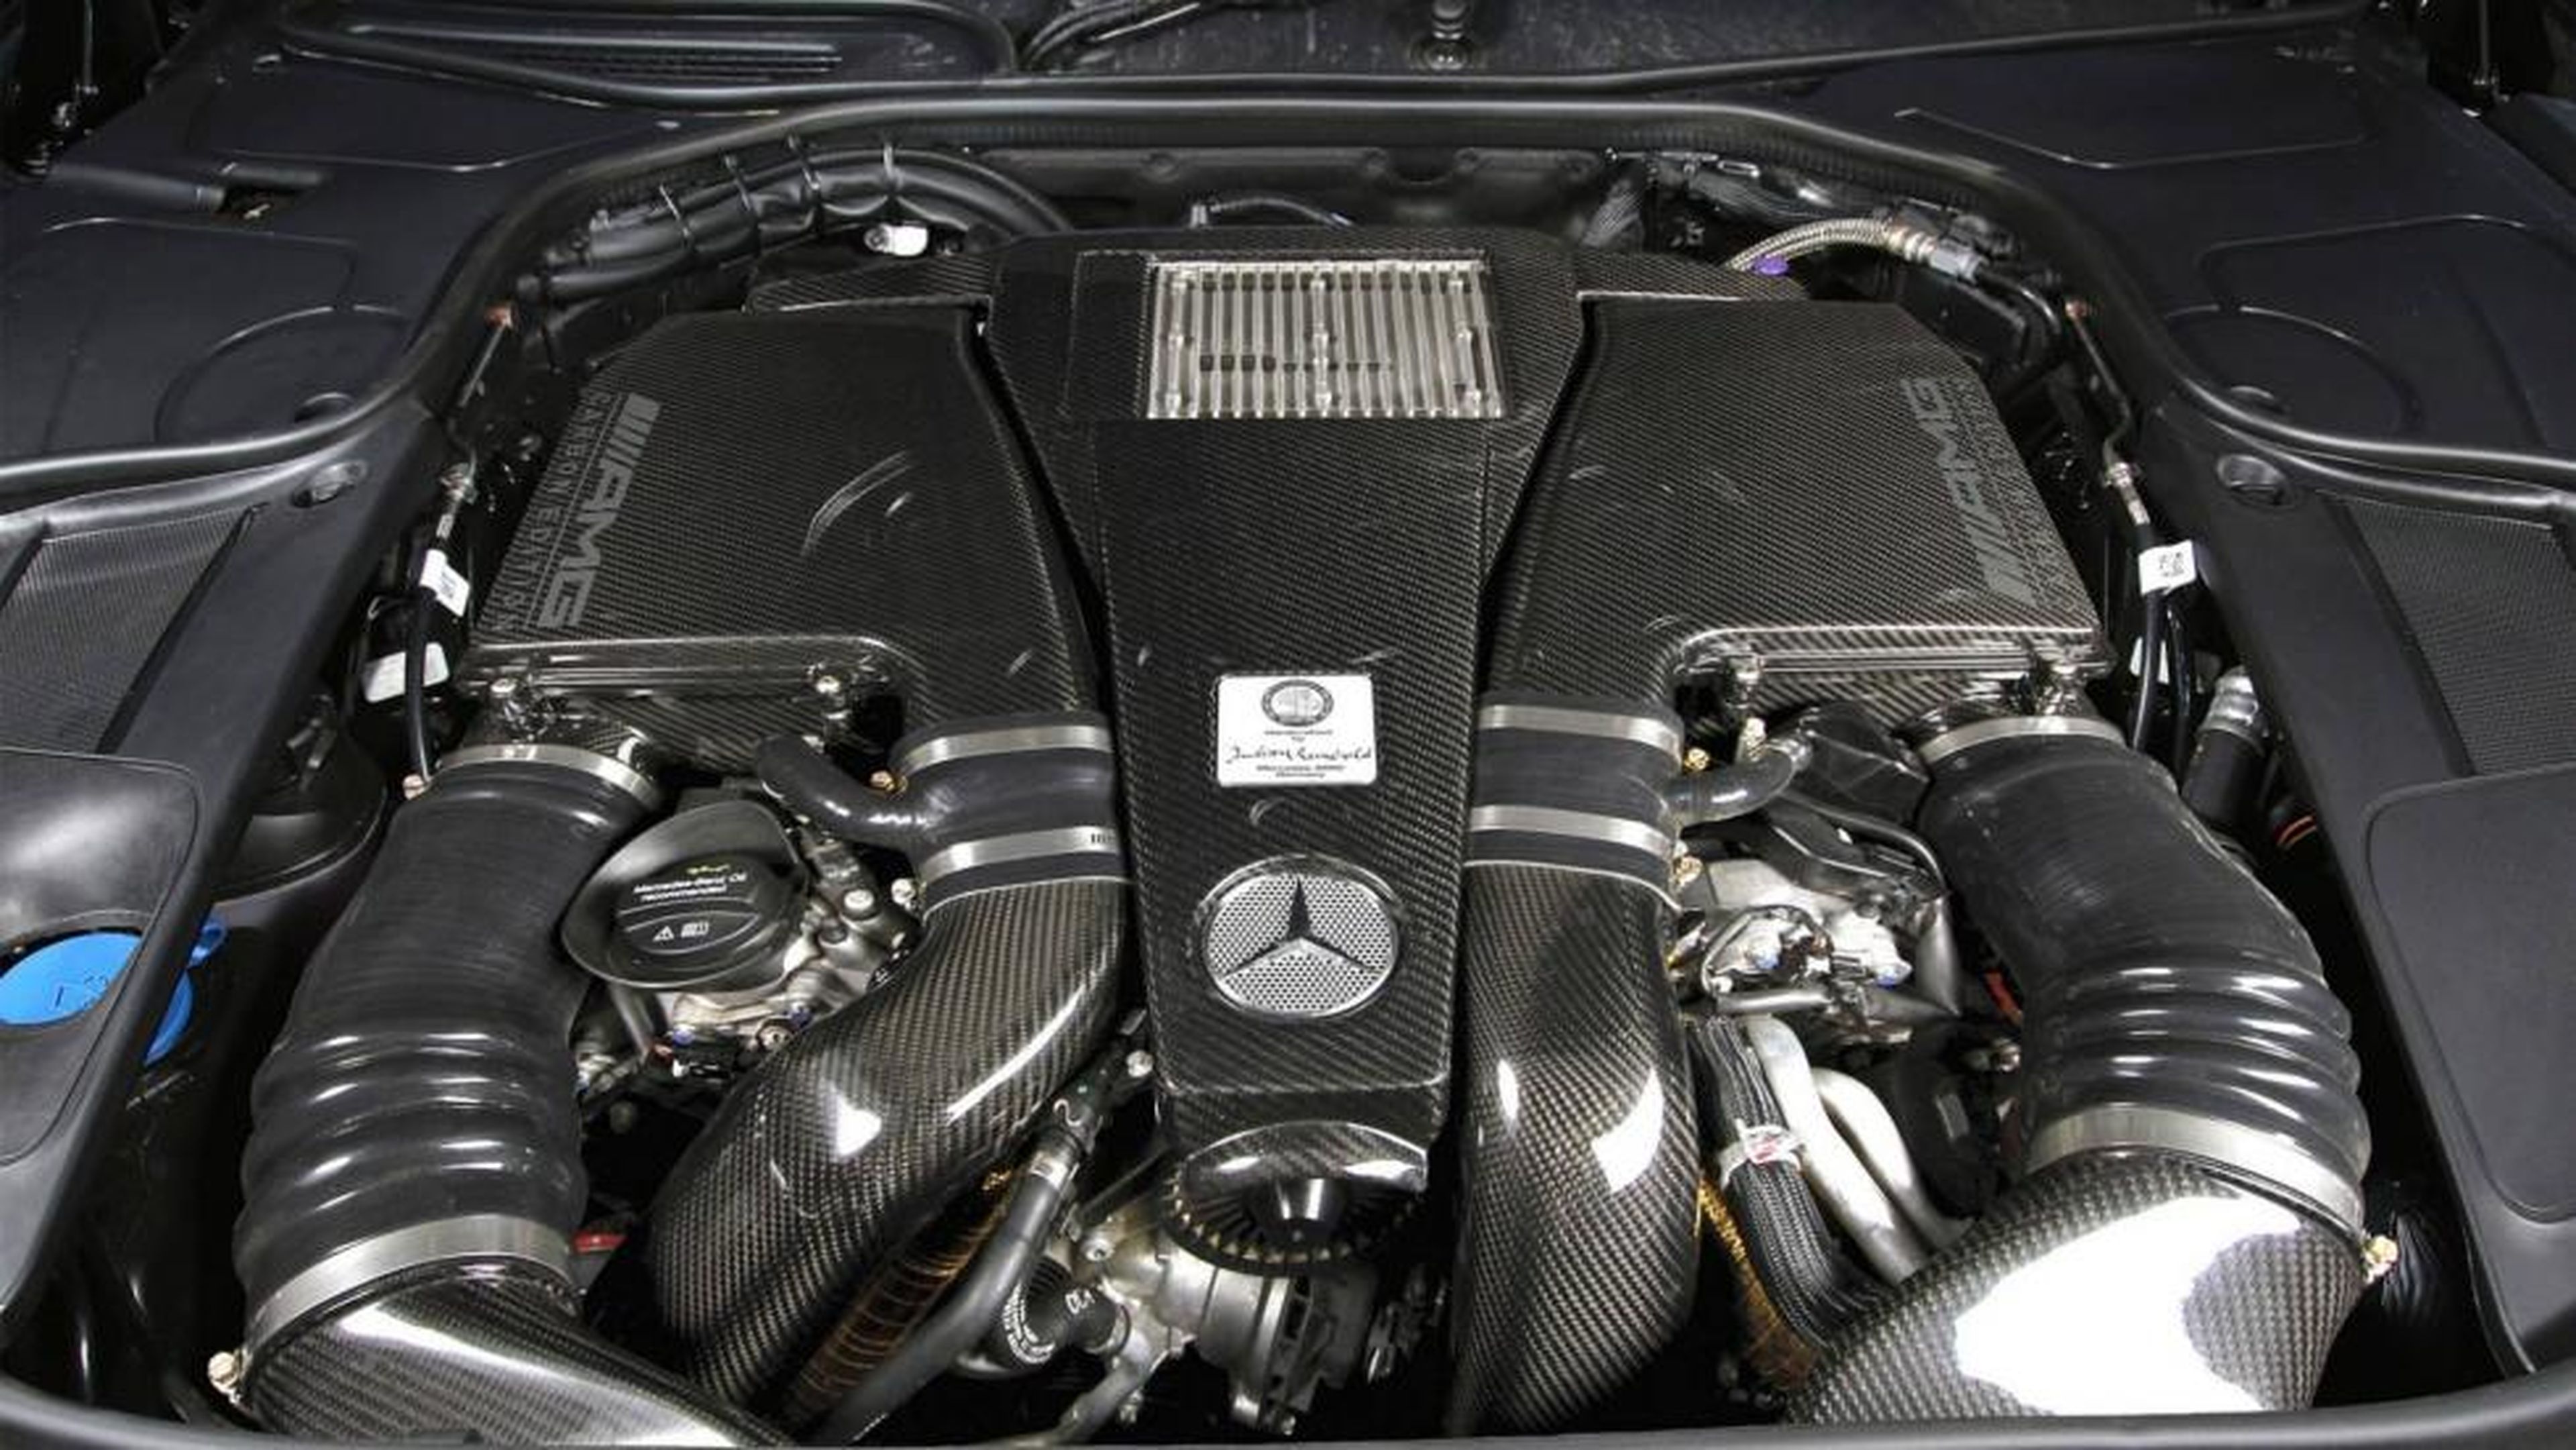 Mercedes-AMG S63 Posaidon